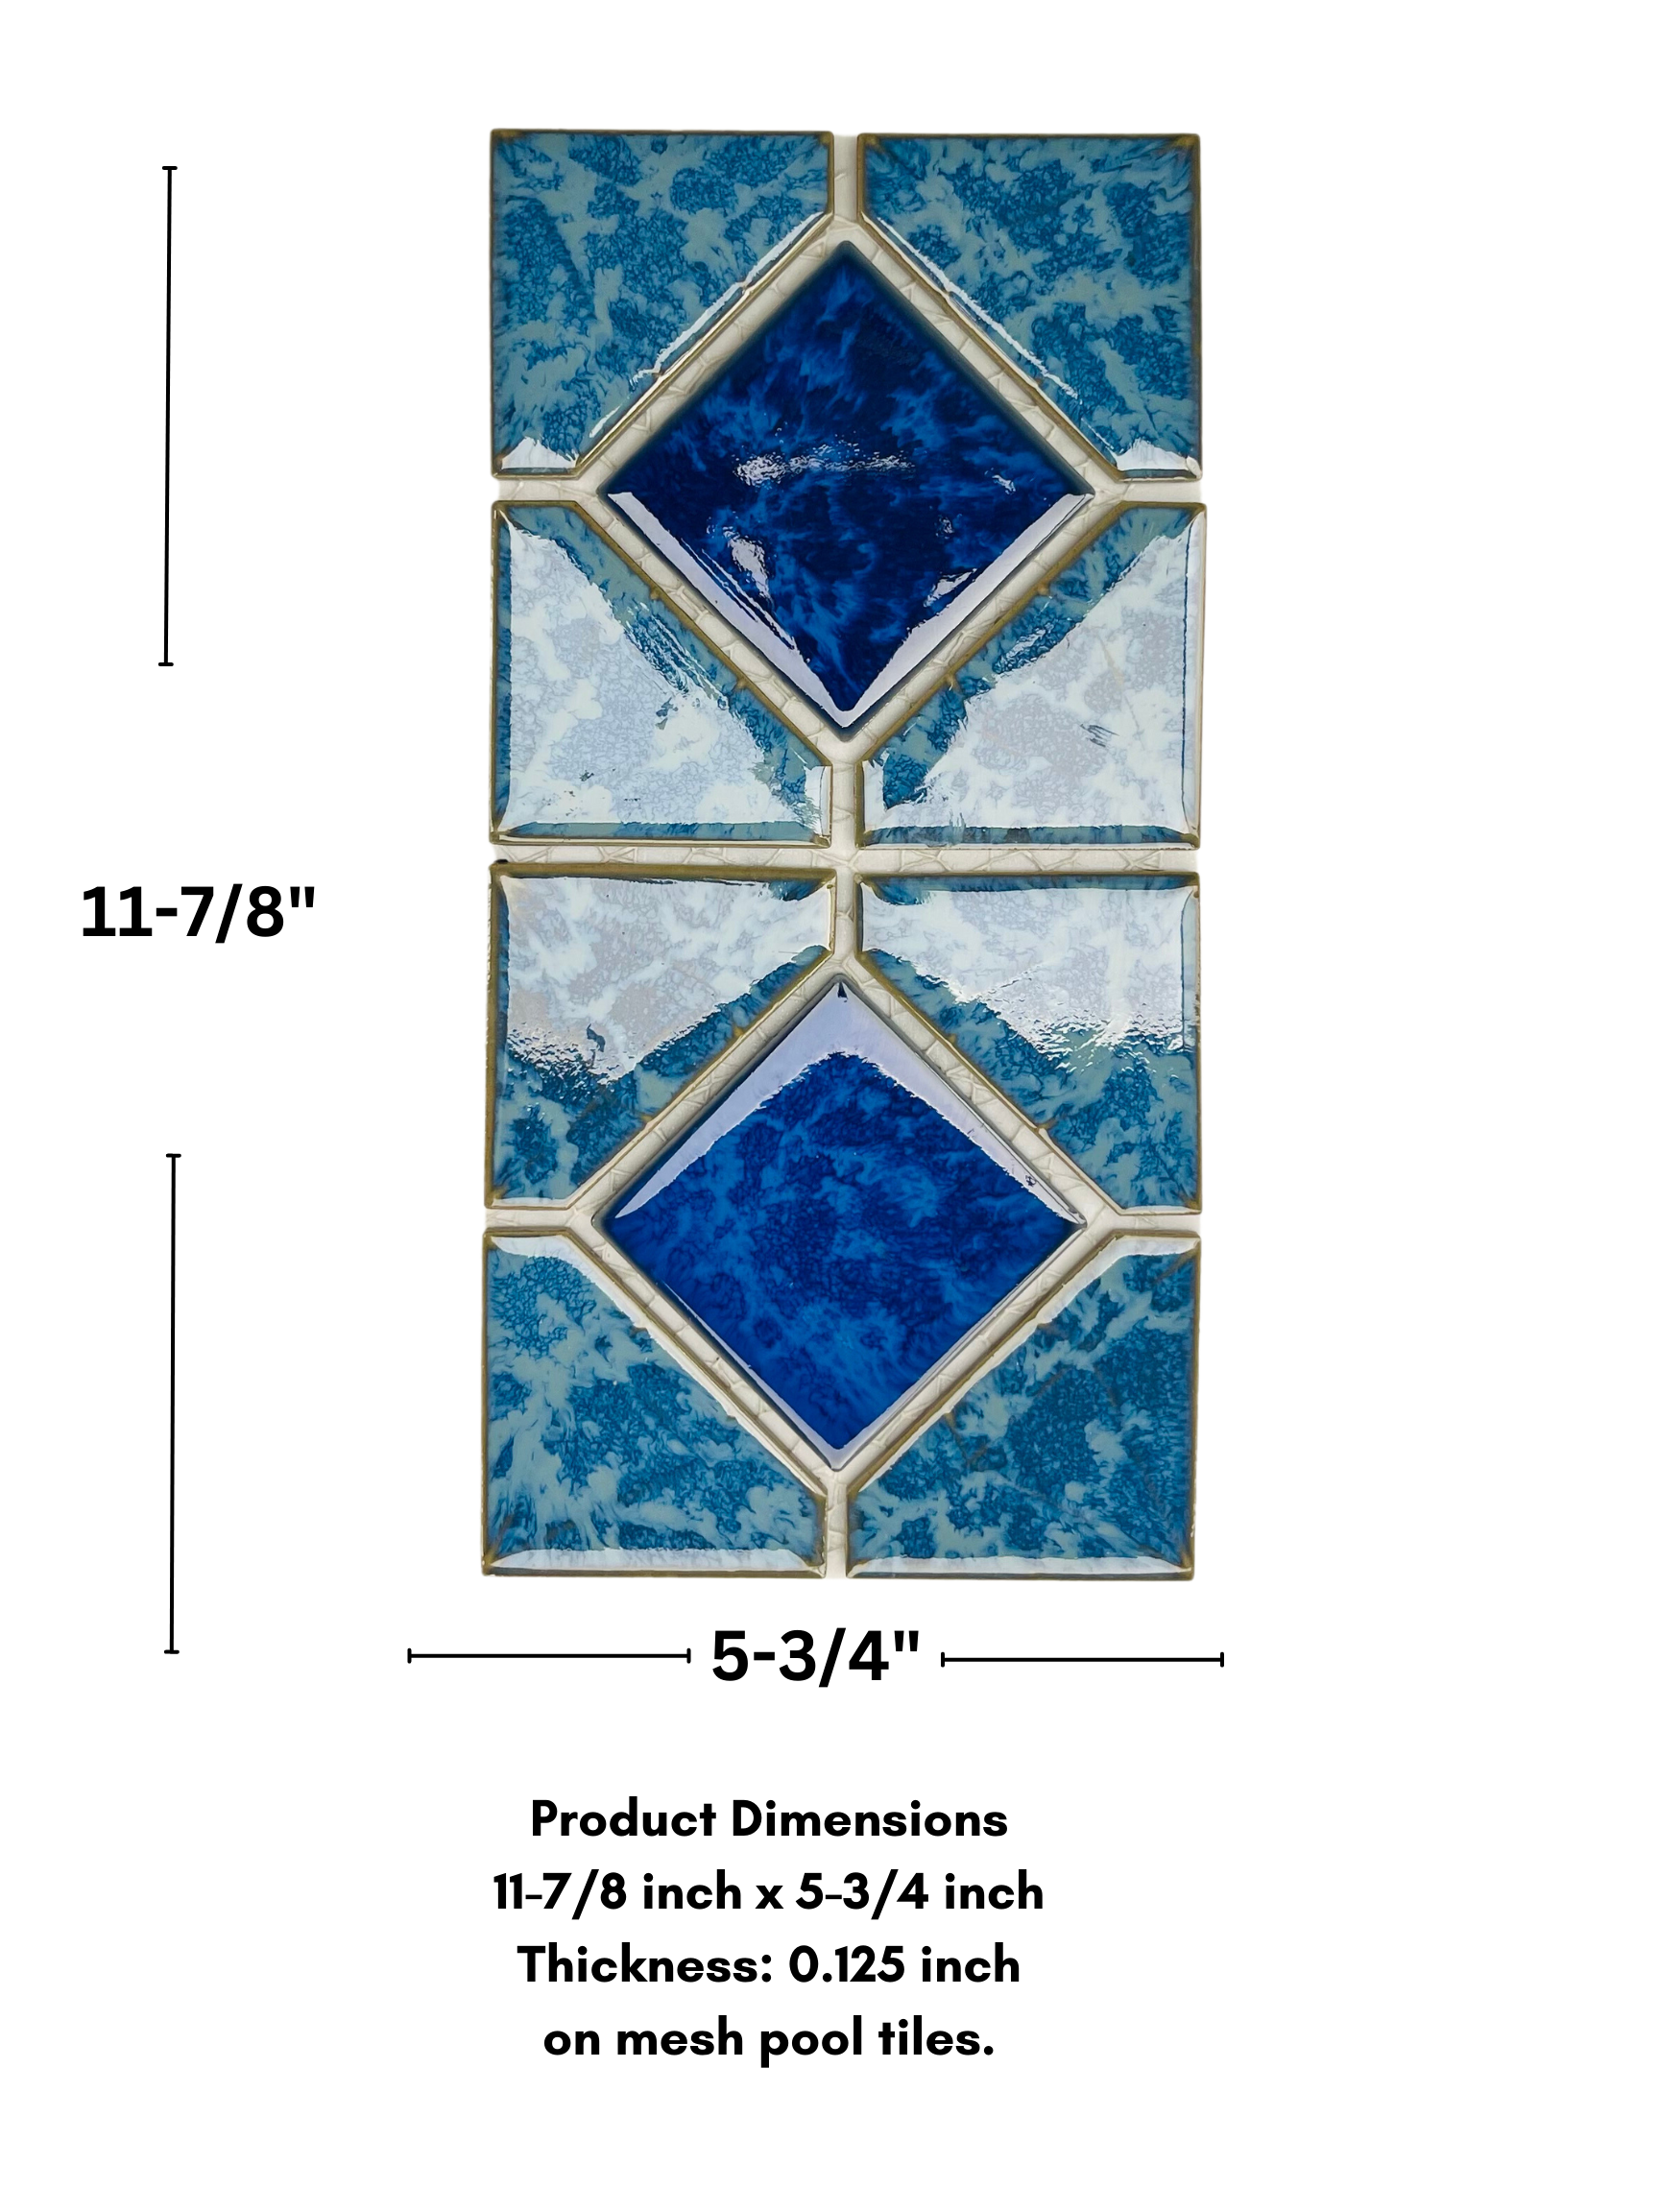 Aqua Marine with Marble Blue Diamond Porcelain Lineup Border Pool Wall Tile Backsplash on 6x12 Mesh Easy Installation for Kitchen, Bathroom, Accent Decor